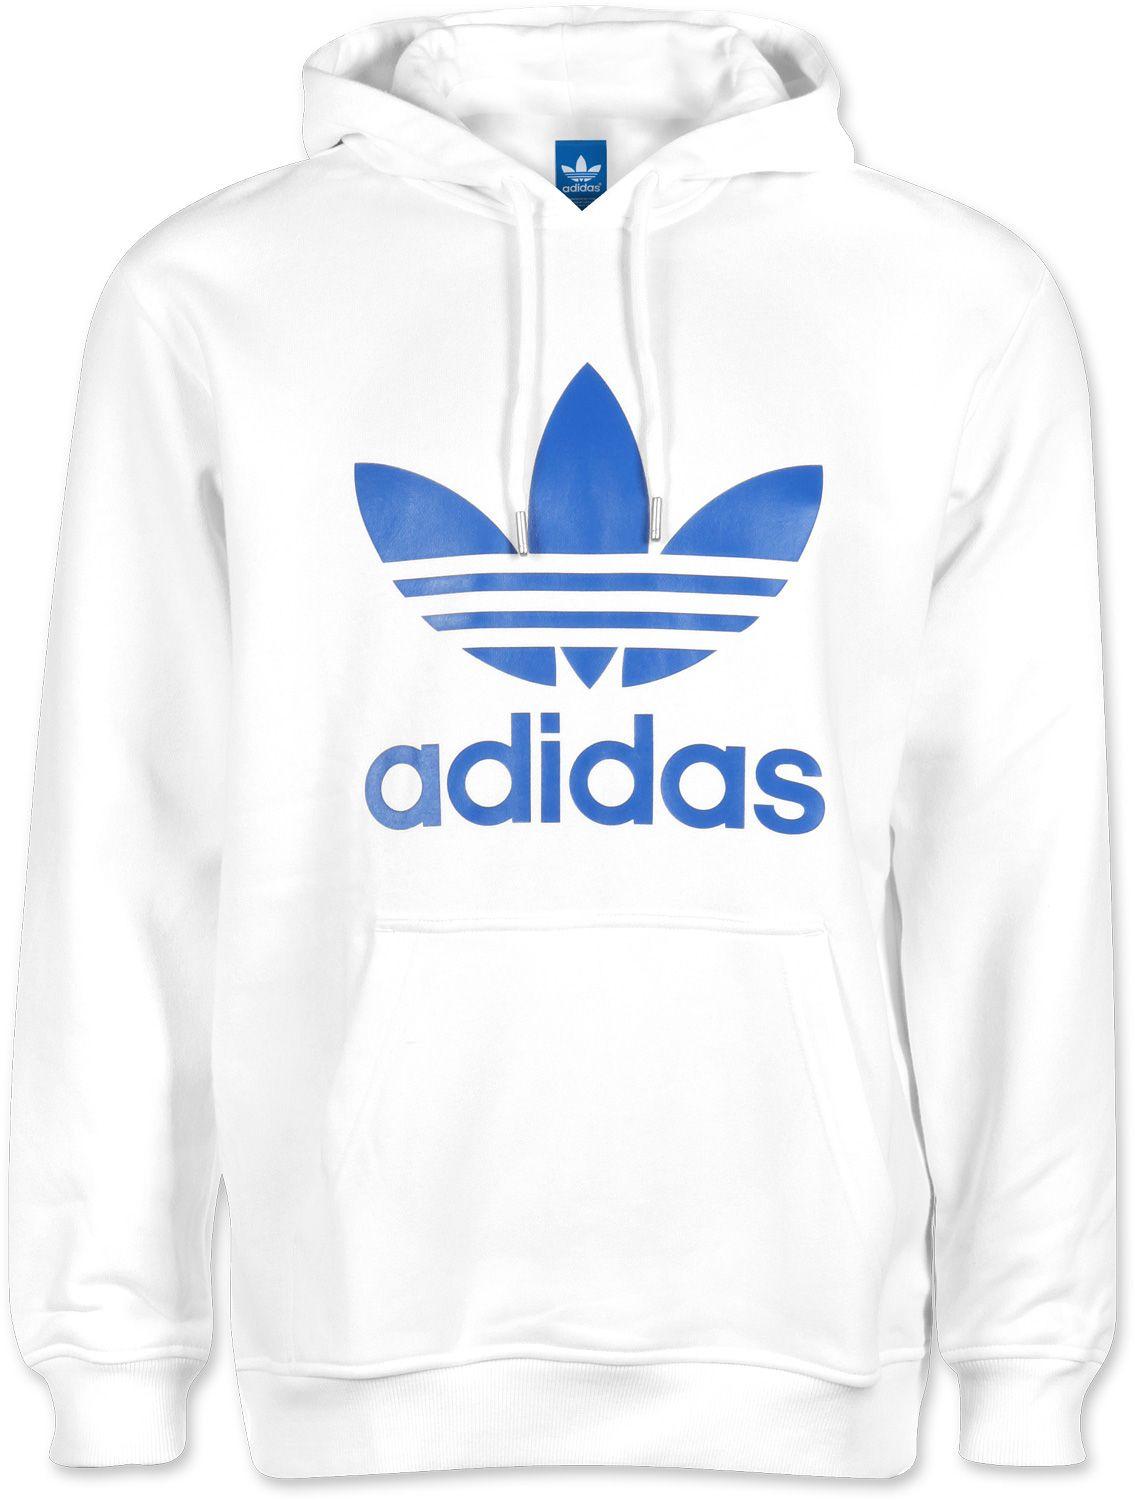 Blue and White Adidas Logo - Adidas trefoil Logos